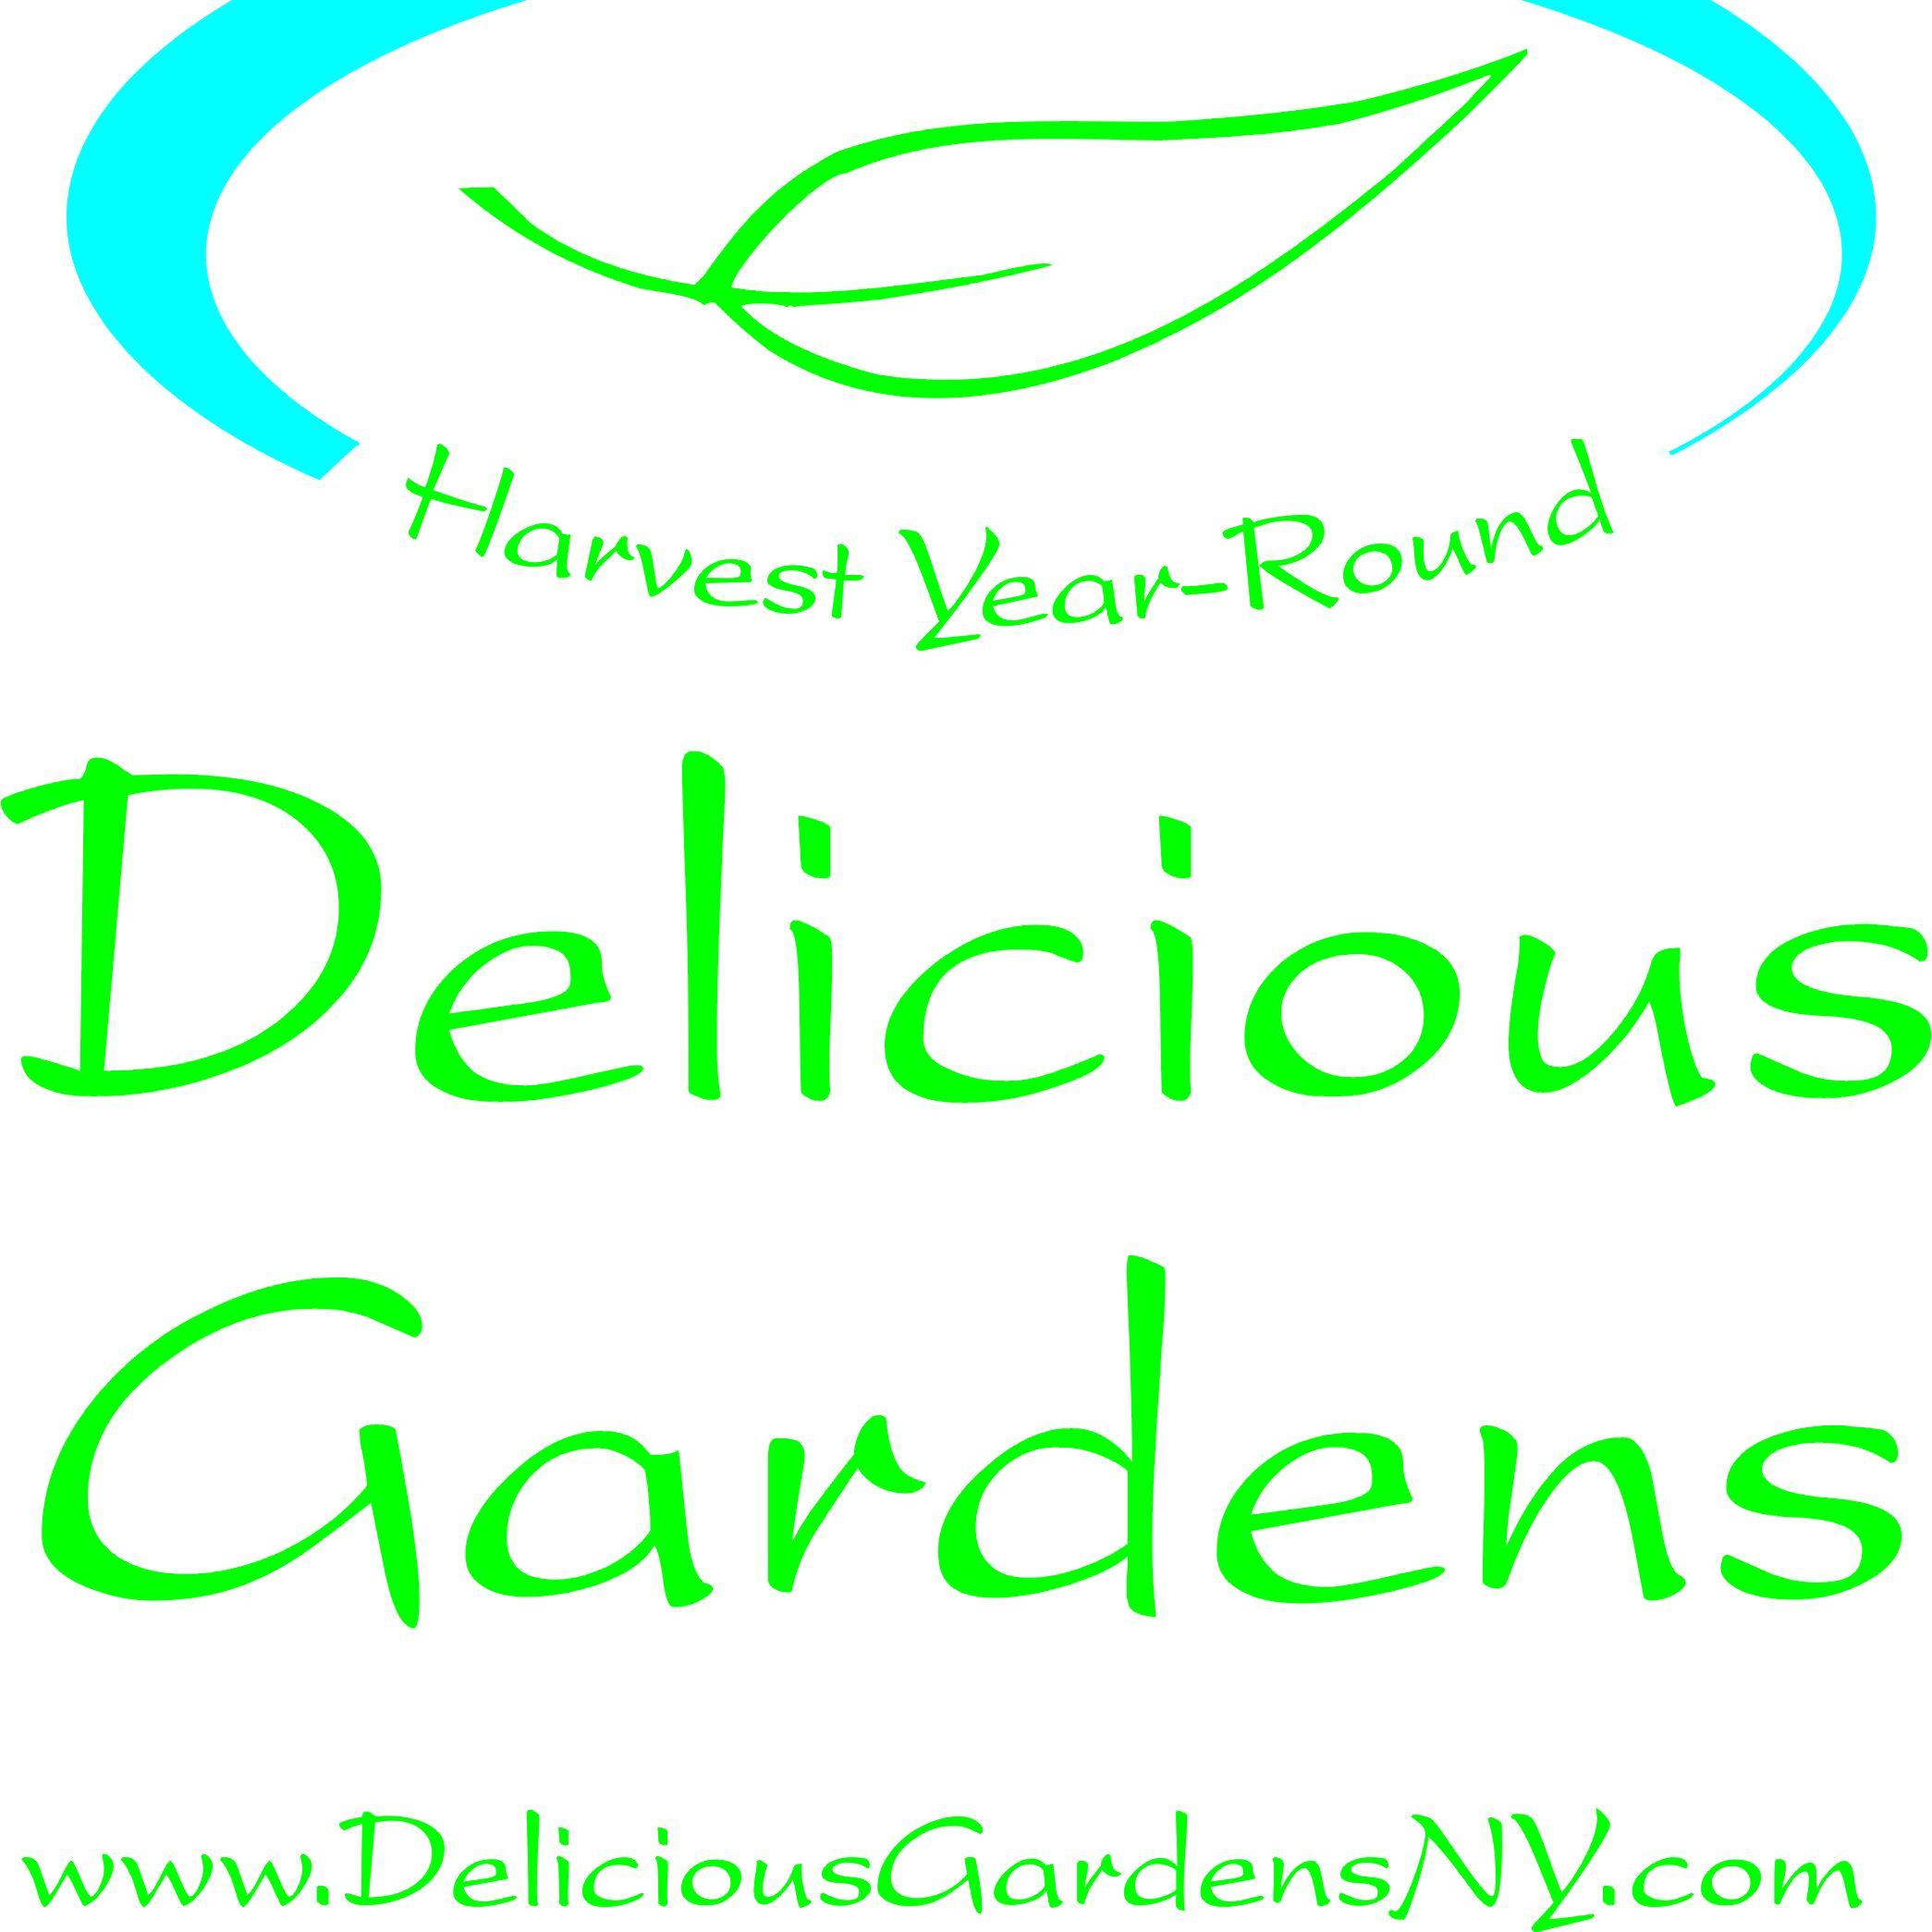 Edible, hydroponic, organic gardening supplies - closed